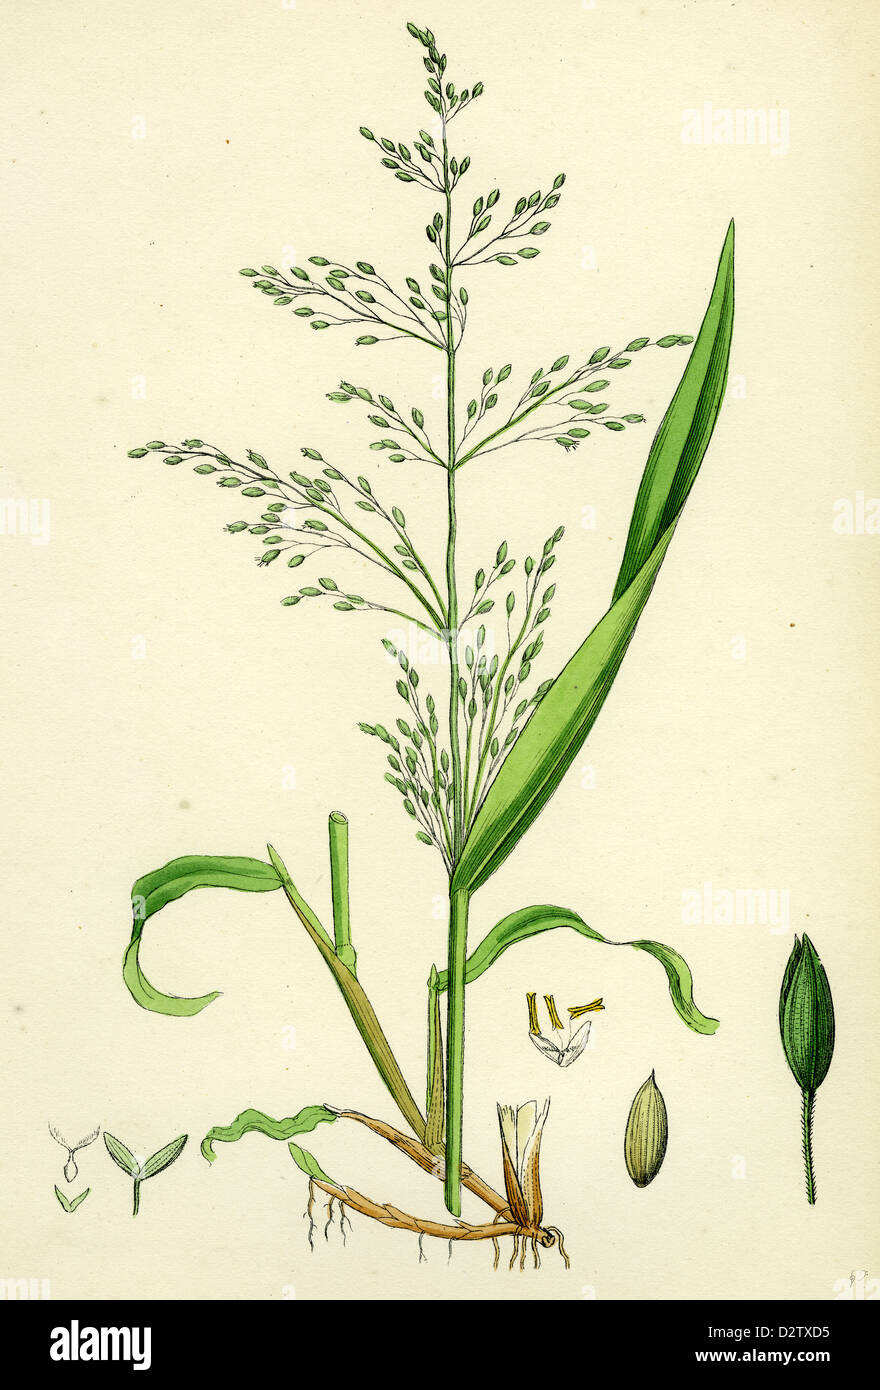 Milium effusum; Wood Millet-grass Stock Photo